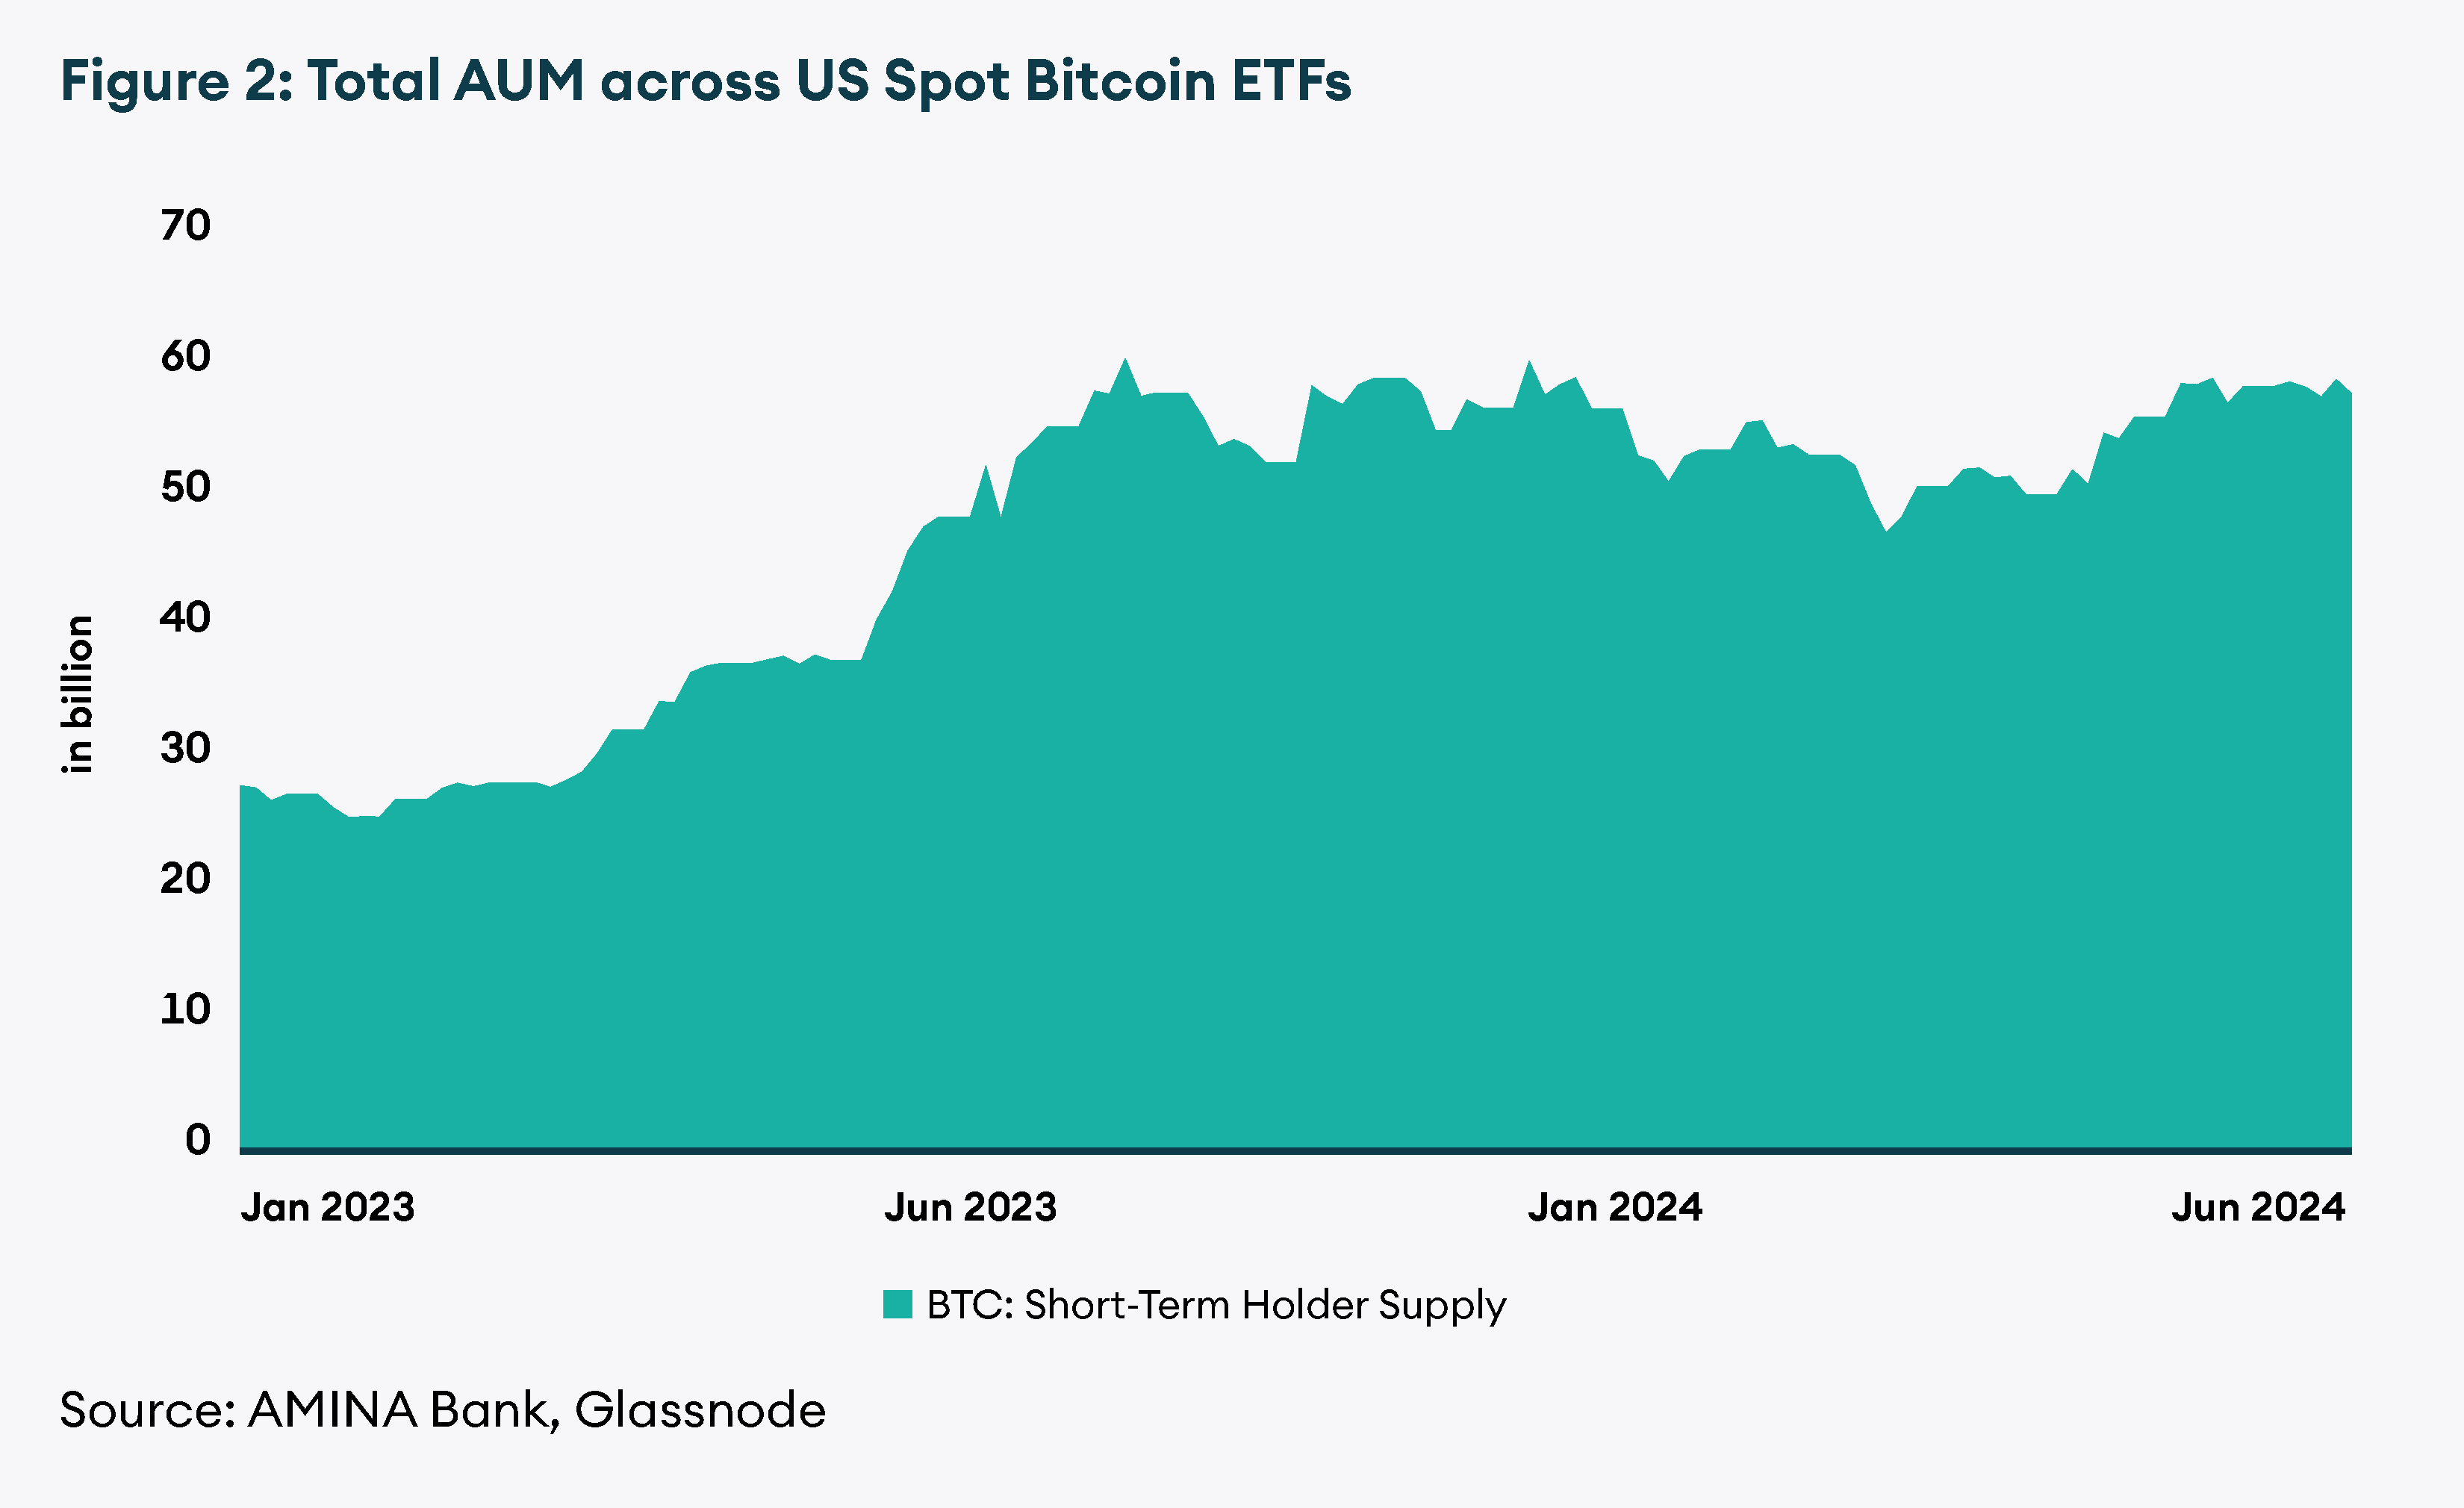 Total AUM across US Spot Bitcoin ETFs